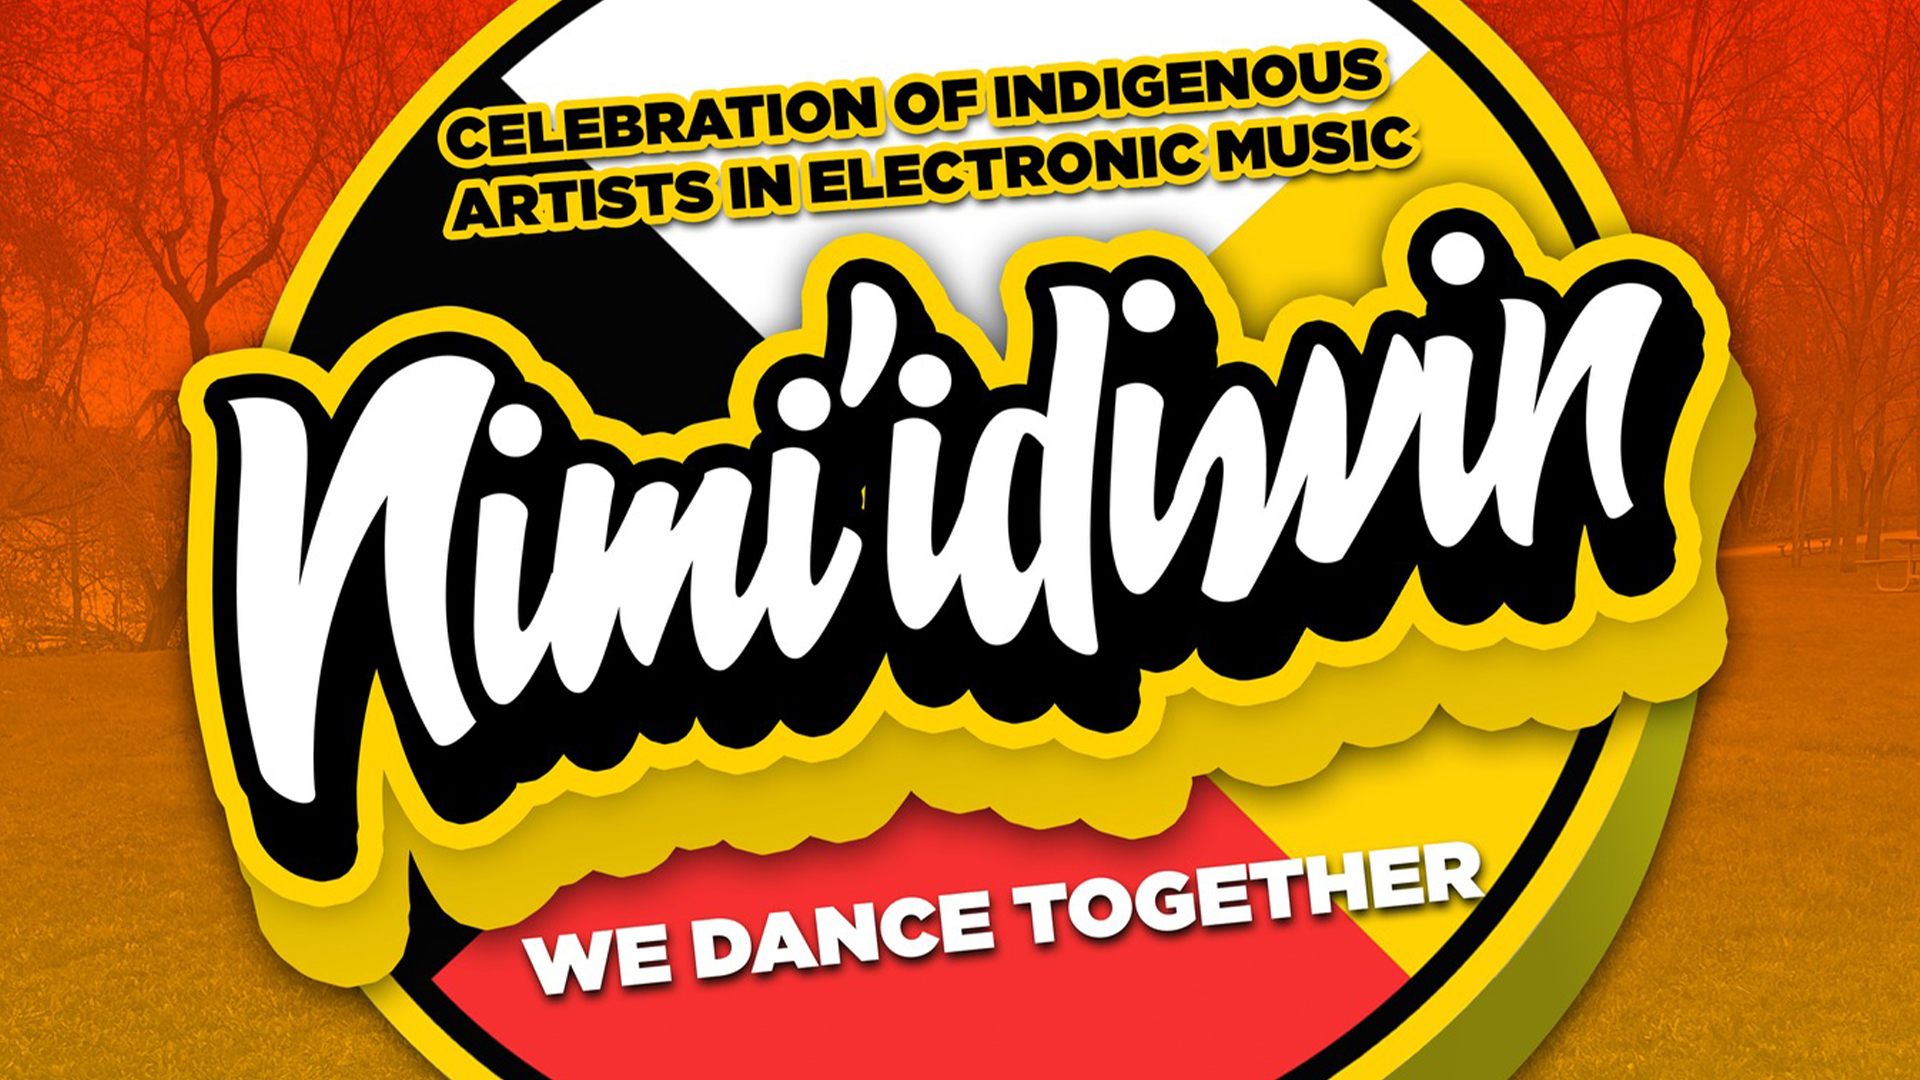 Nimi'idiwin logo for Indigenous electronic music festival